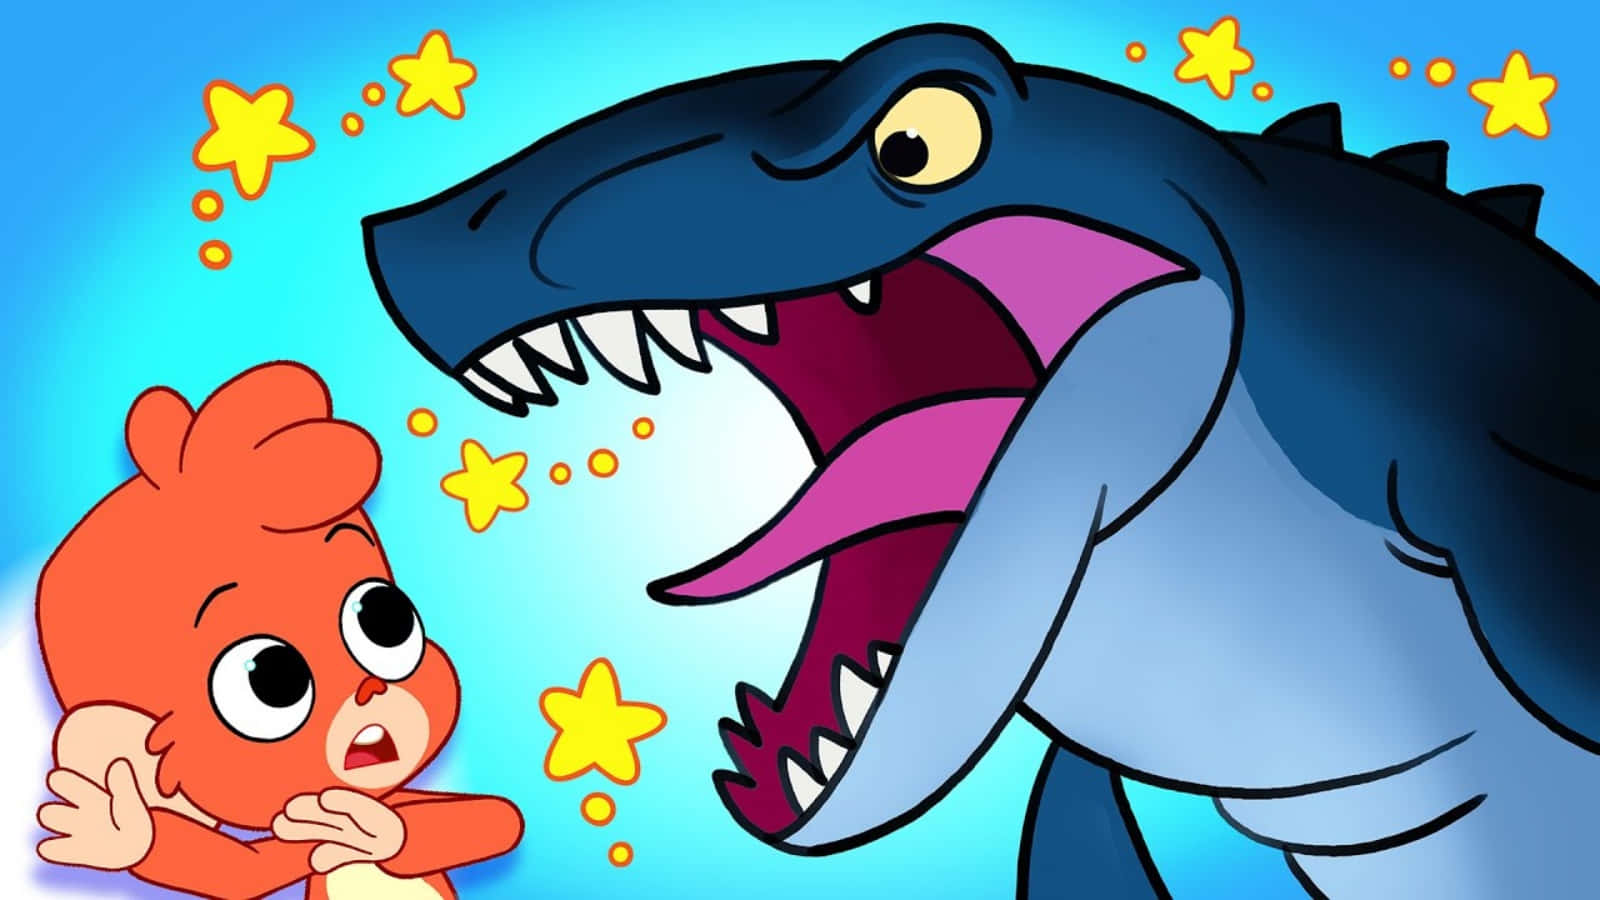 Colorfully fun and friendly dinosaur cartoon